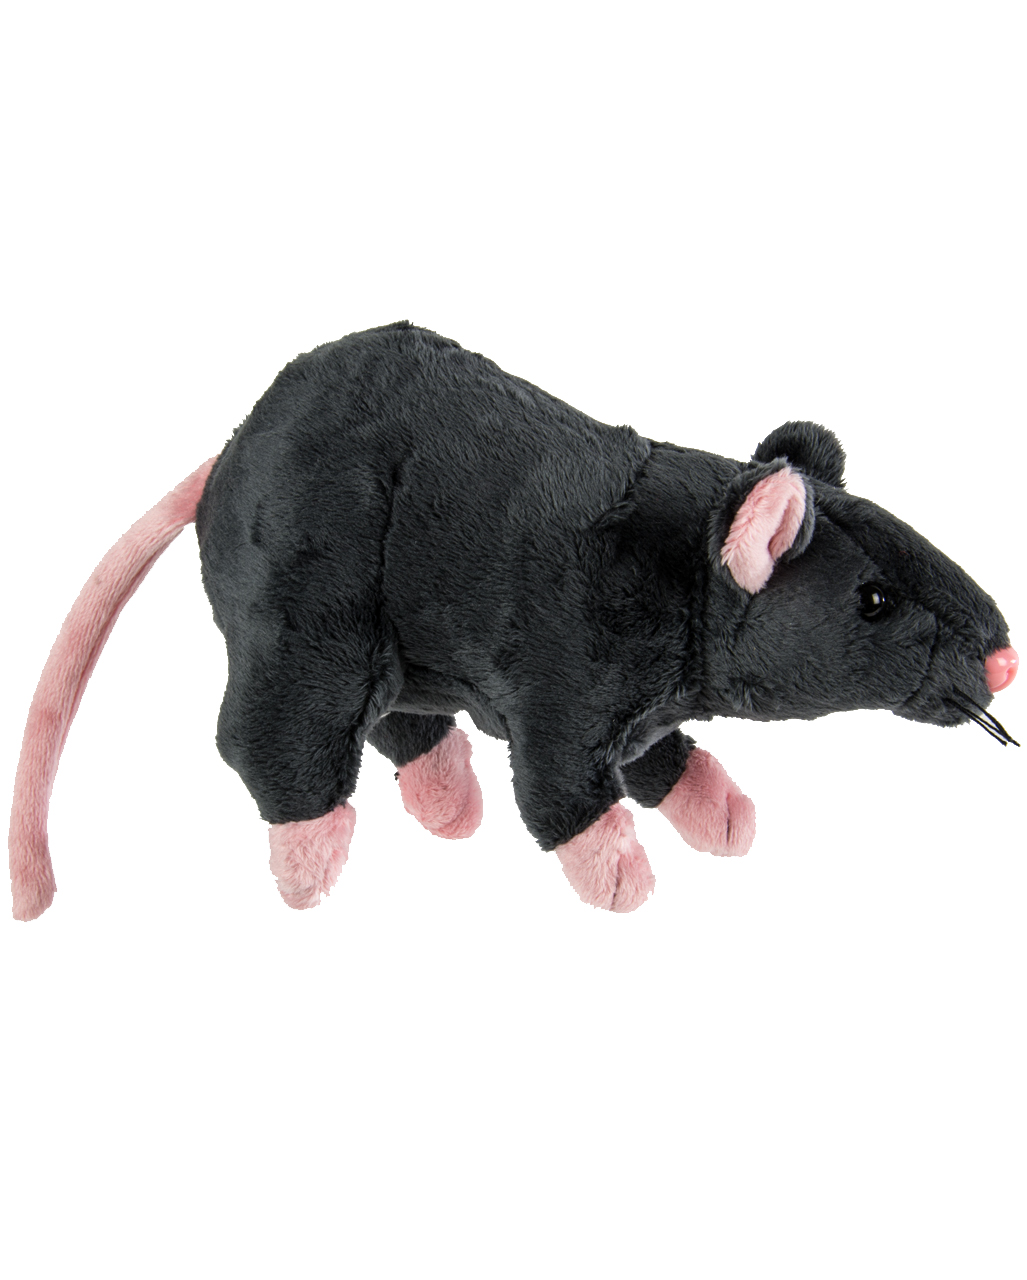 rat cuddly toy